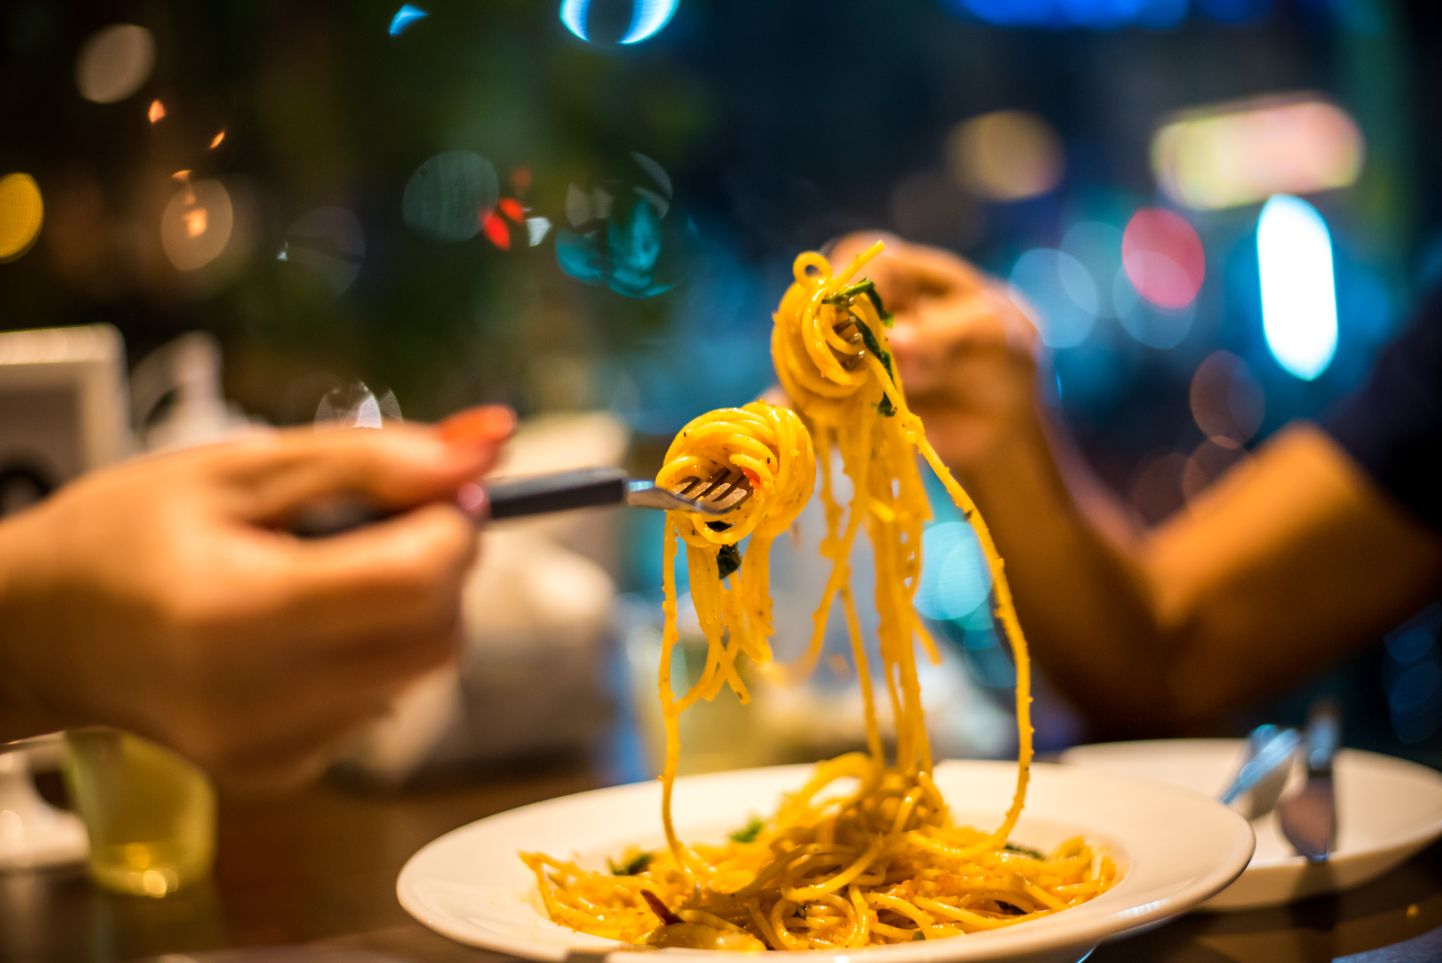 Спагетти на вилке. Иллюстративное фото